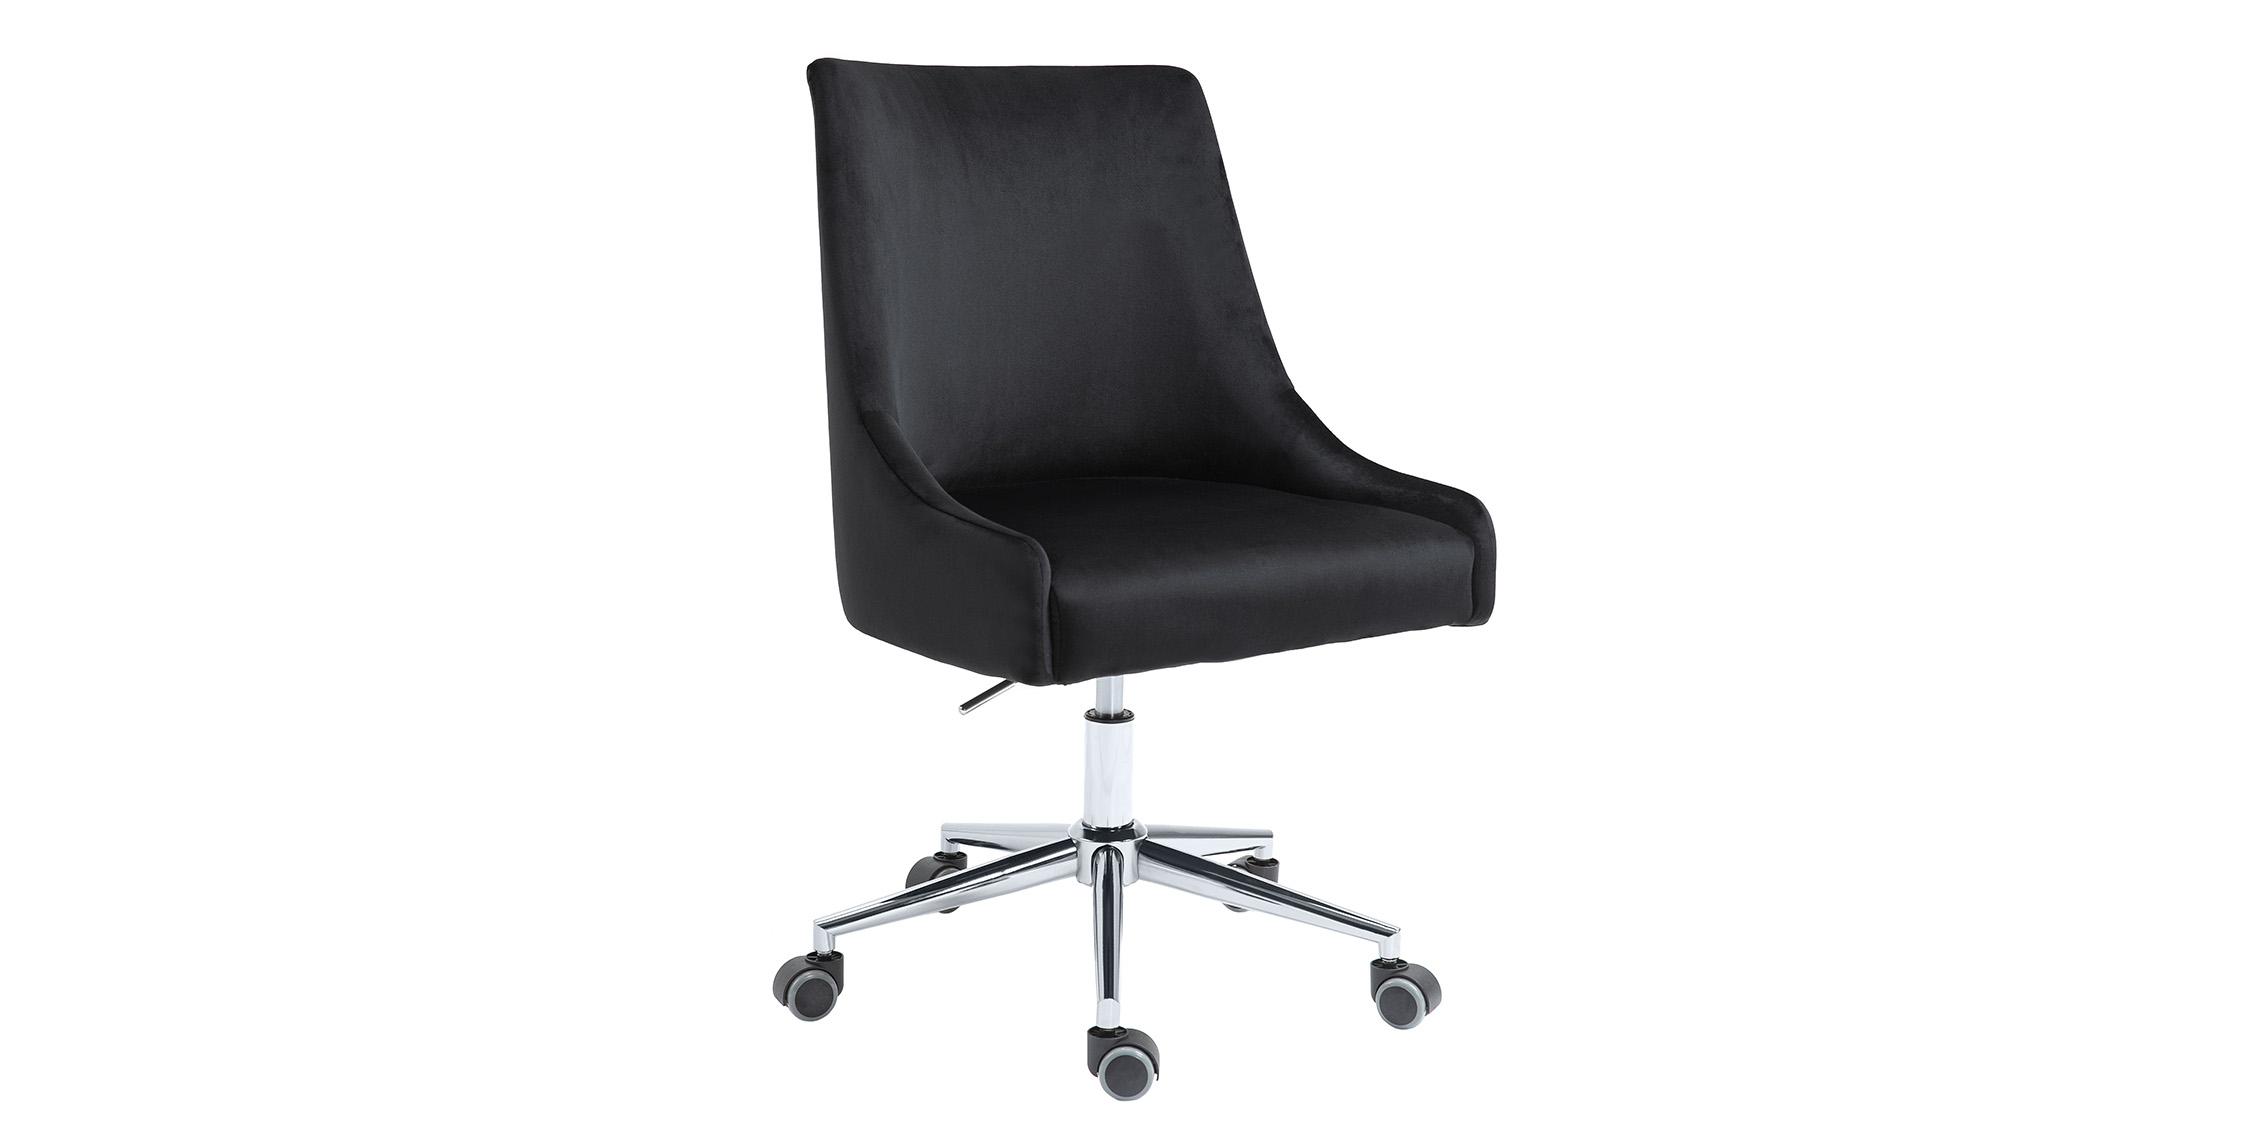 Contemporary, Modern Office Chair KARINA 164Black 164Black in Chrome, Black Fabric